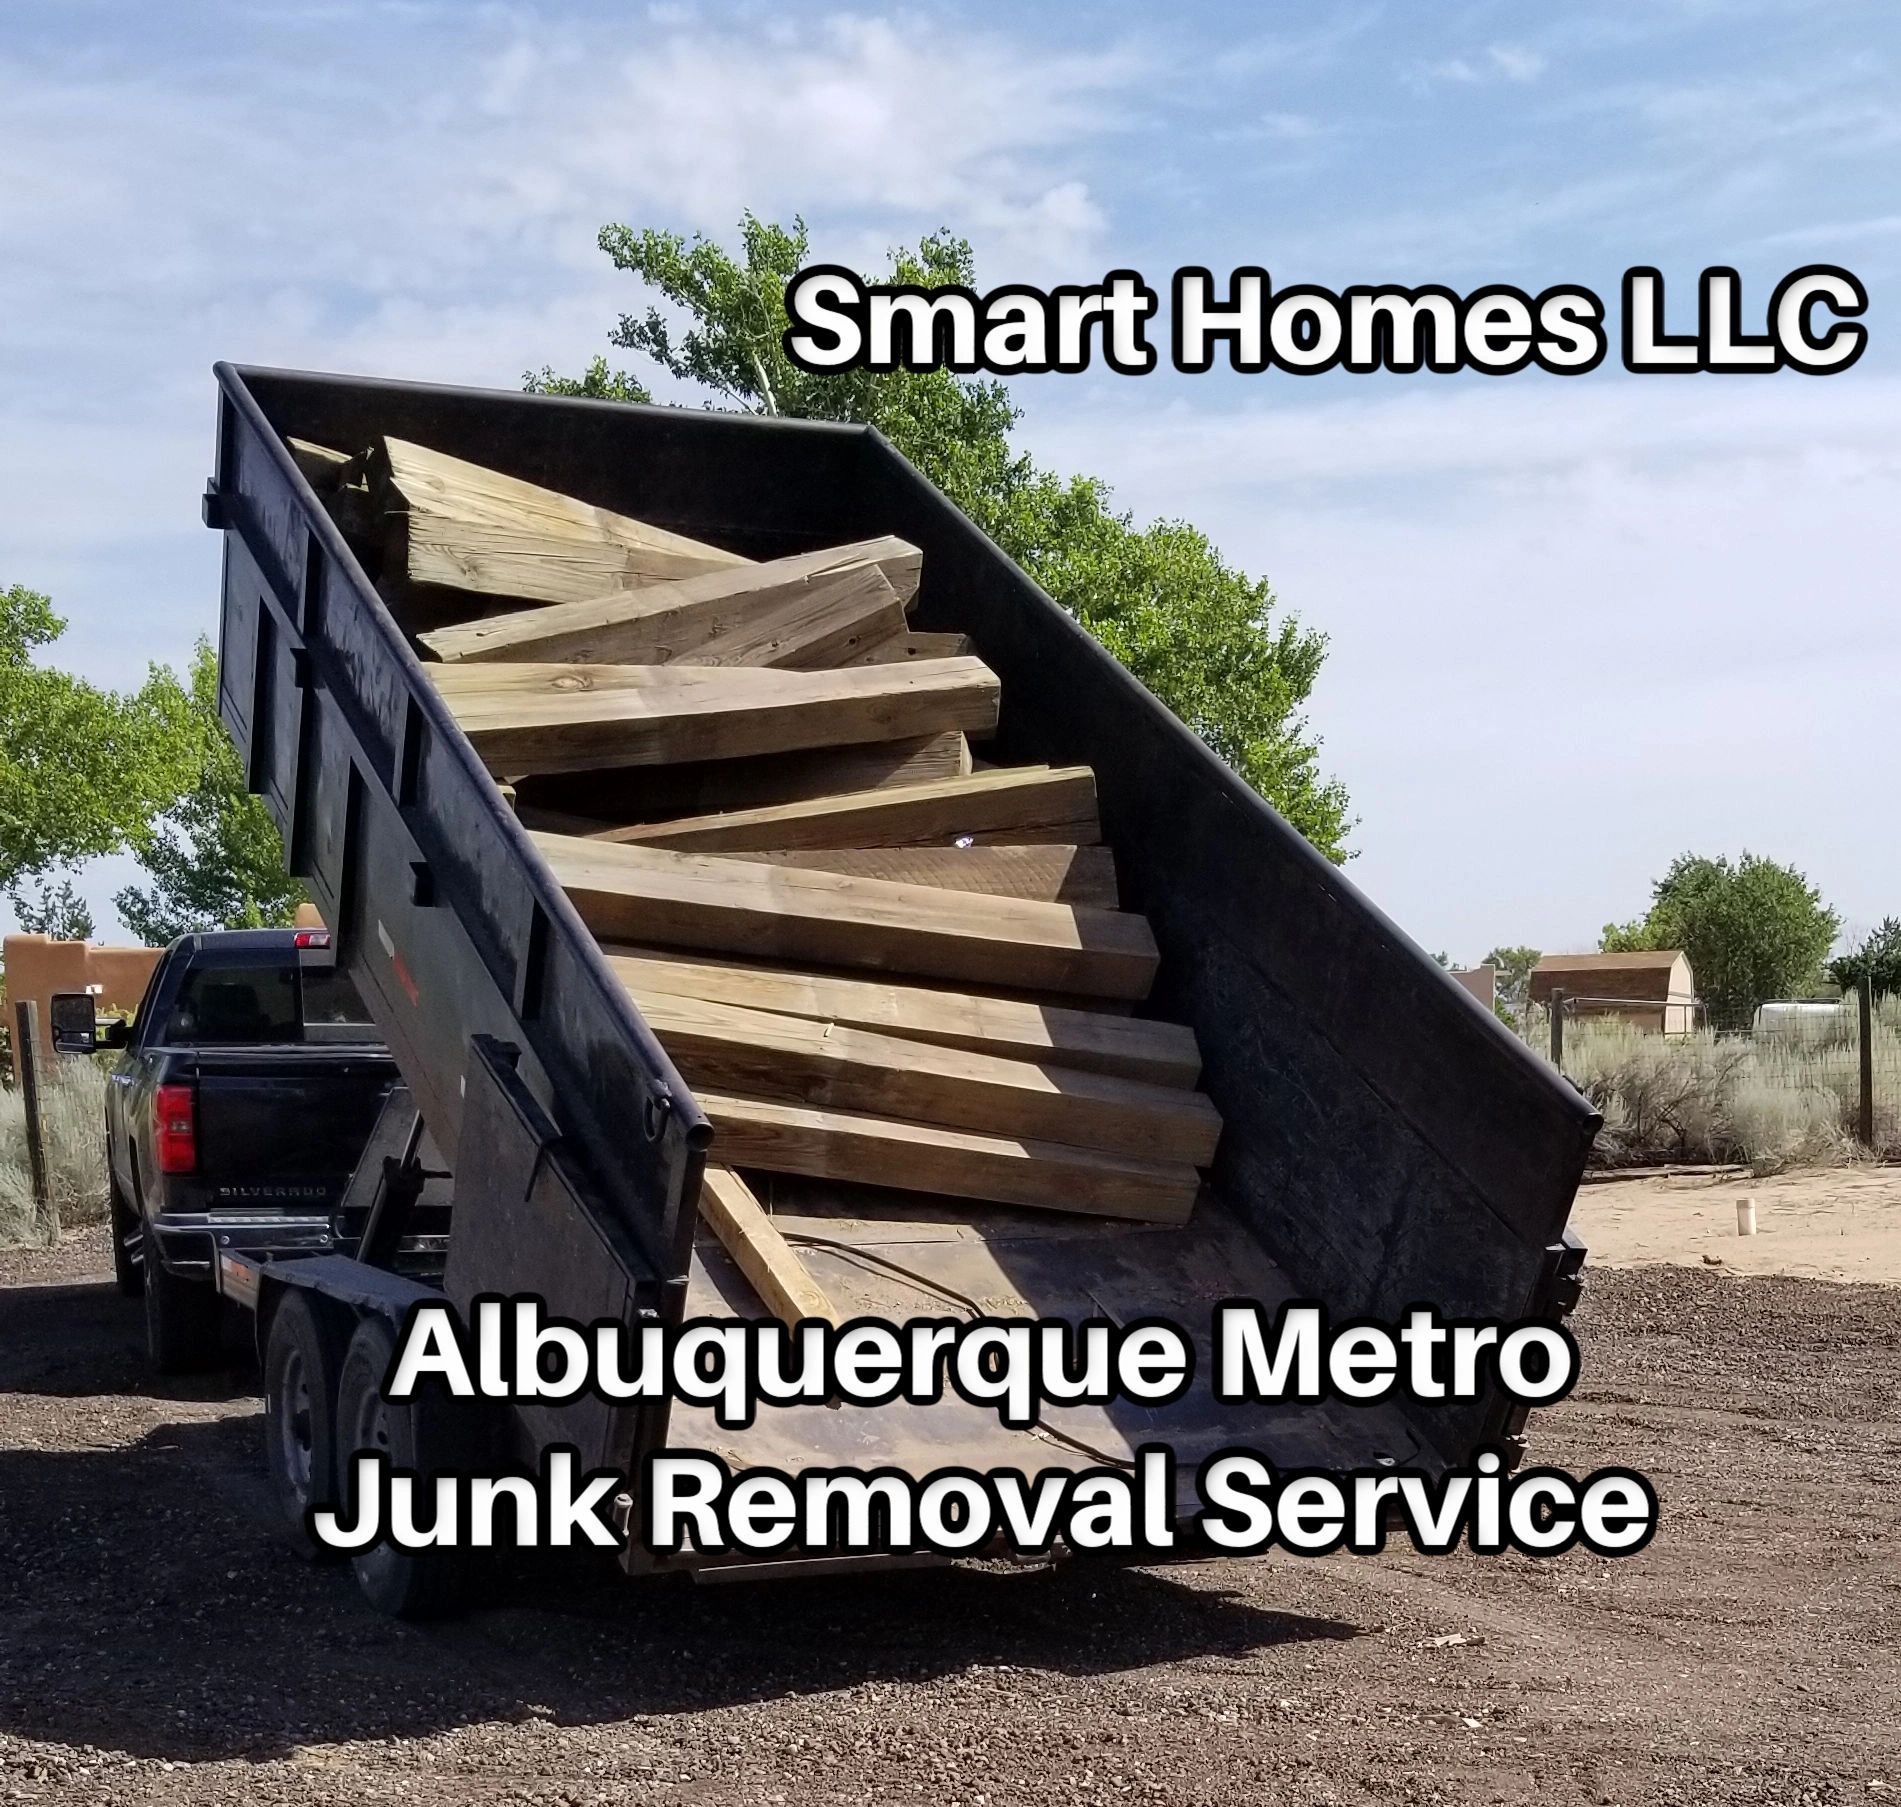 Smart Homes junk removal service in Albuquerque